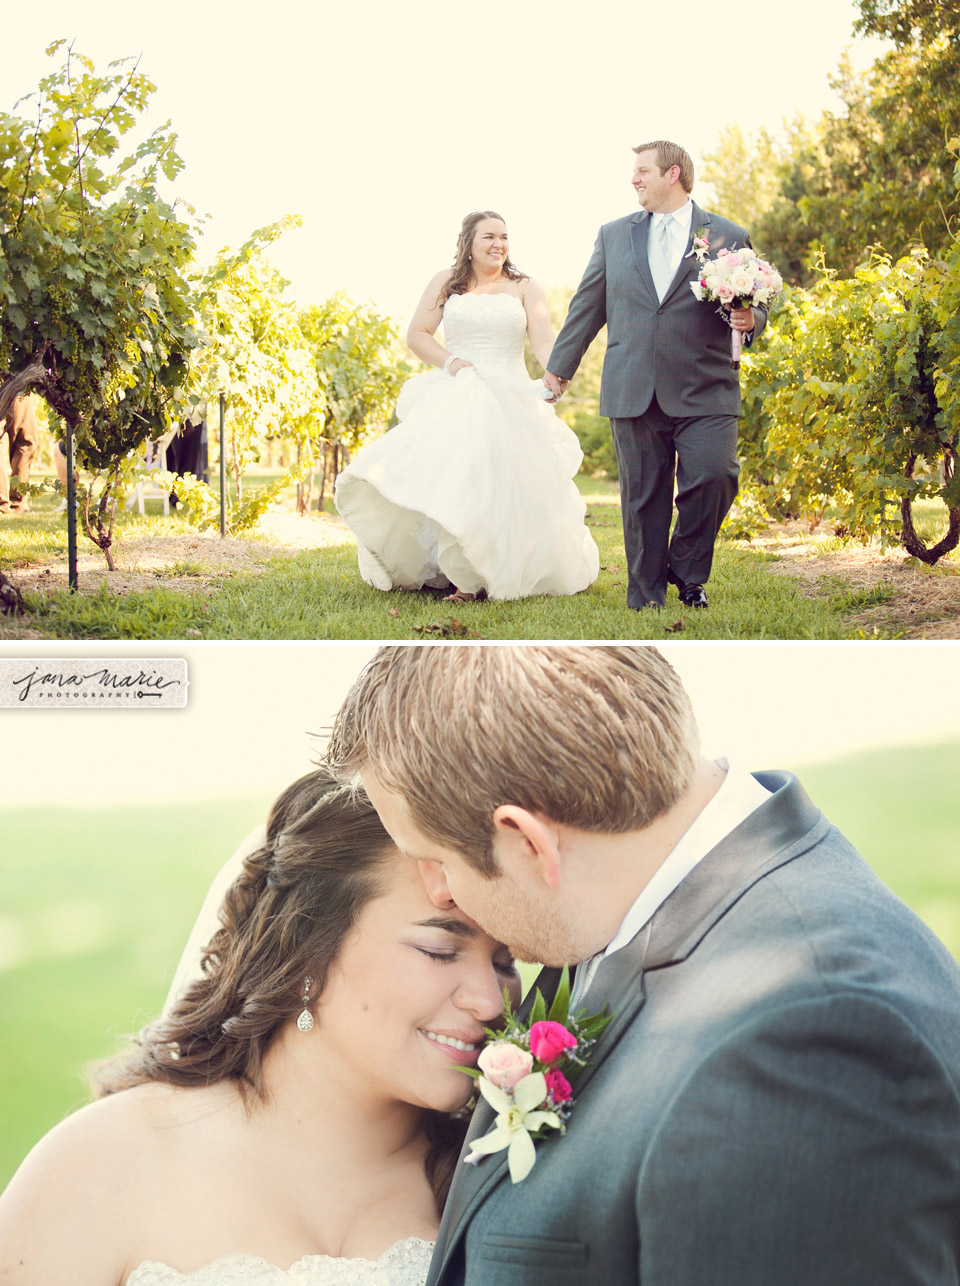 Vineyard wedding, Kansas portraits, Jana Marie Photography, Summer, Sneak peak, featured images